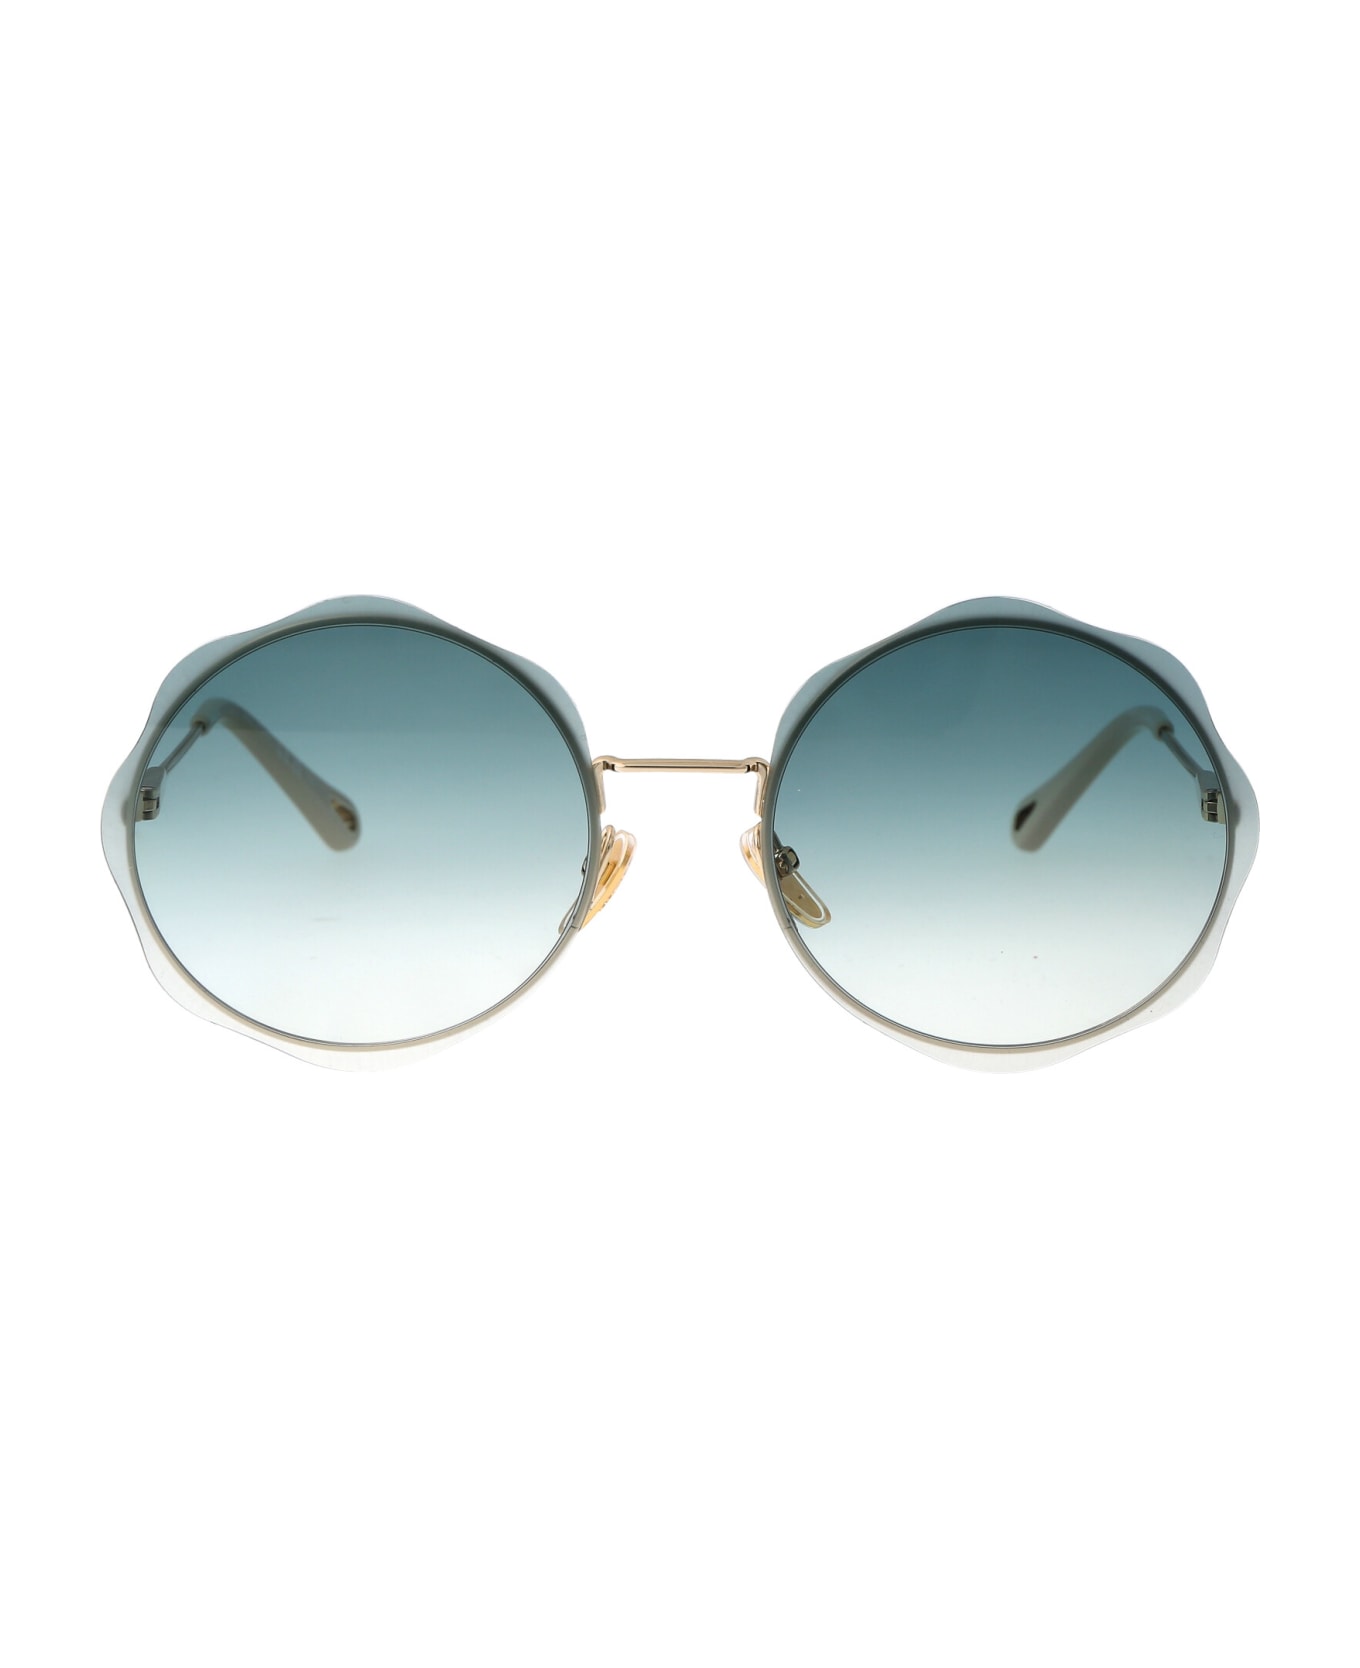 Chloé Eyewear Ch0202s Sunglasses - 002 GOLD GOLD GREEN